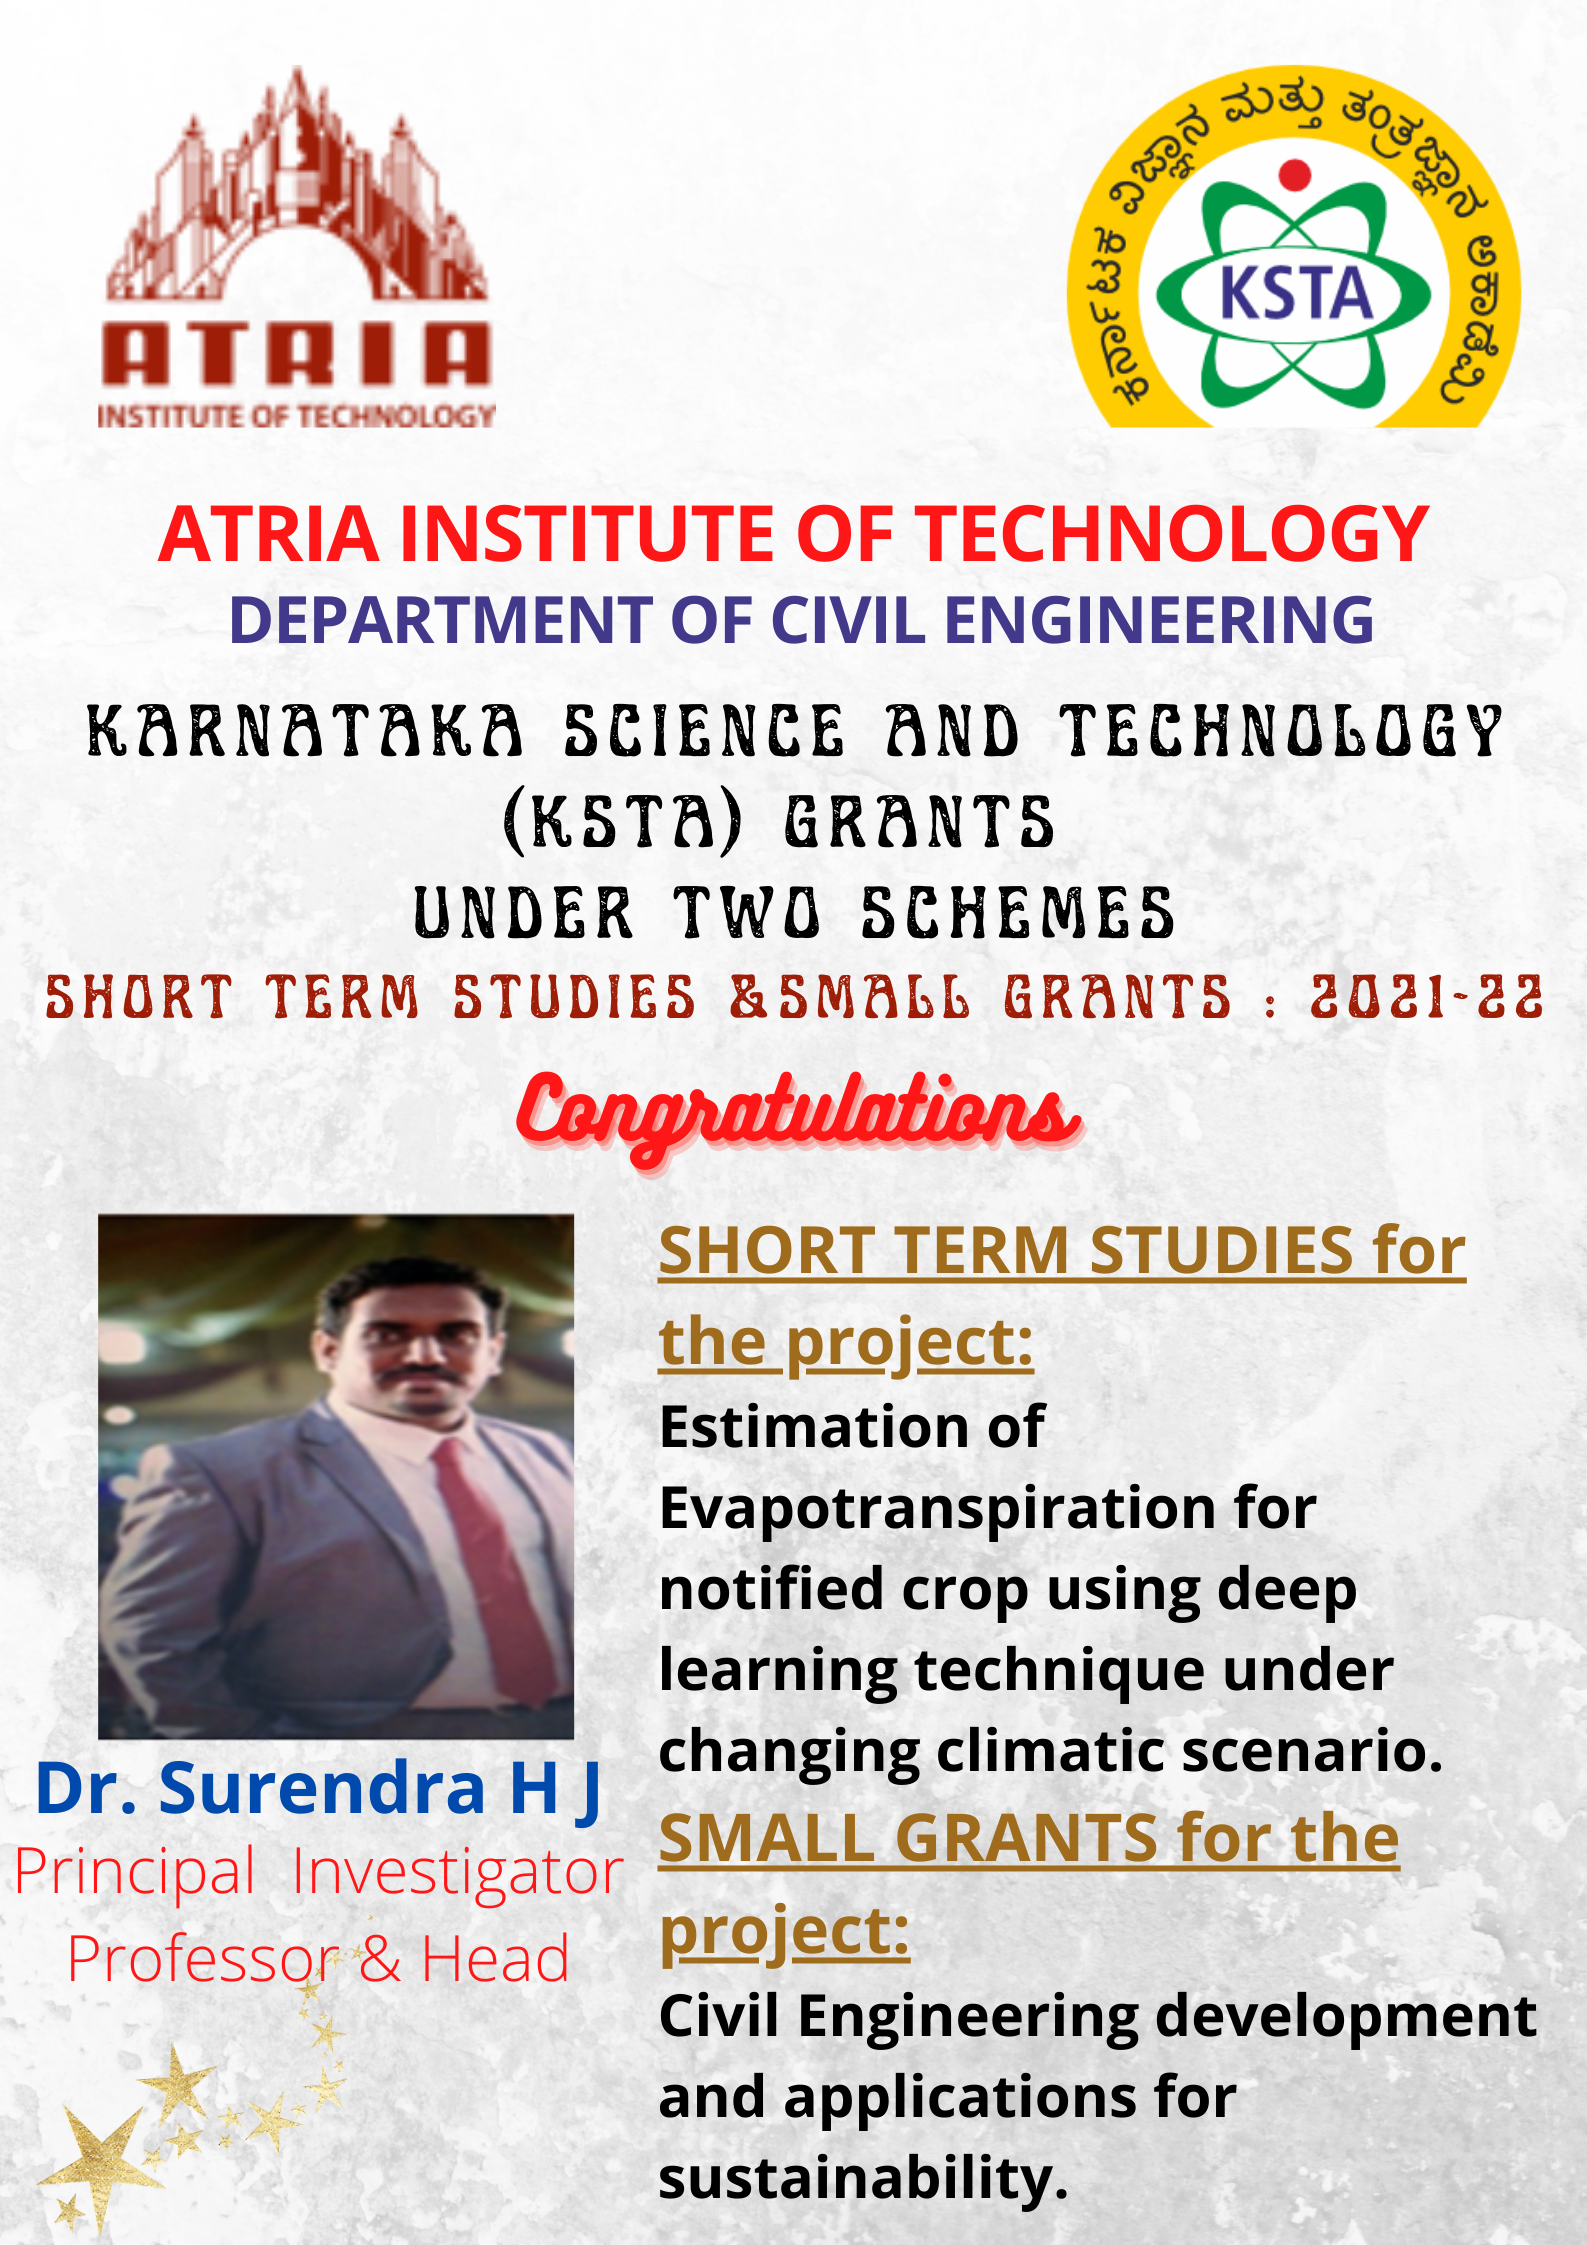 Dr. Surendra